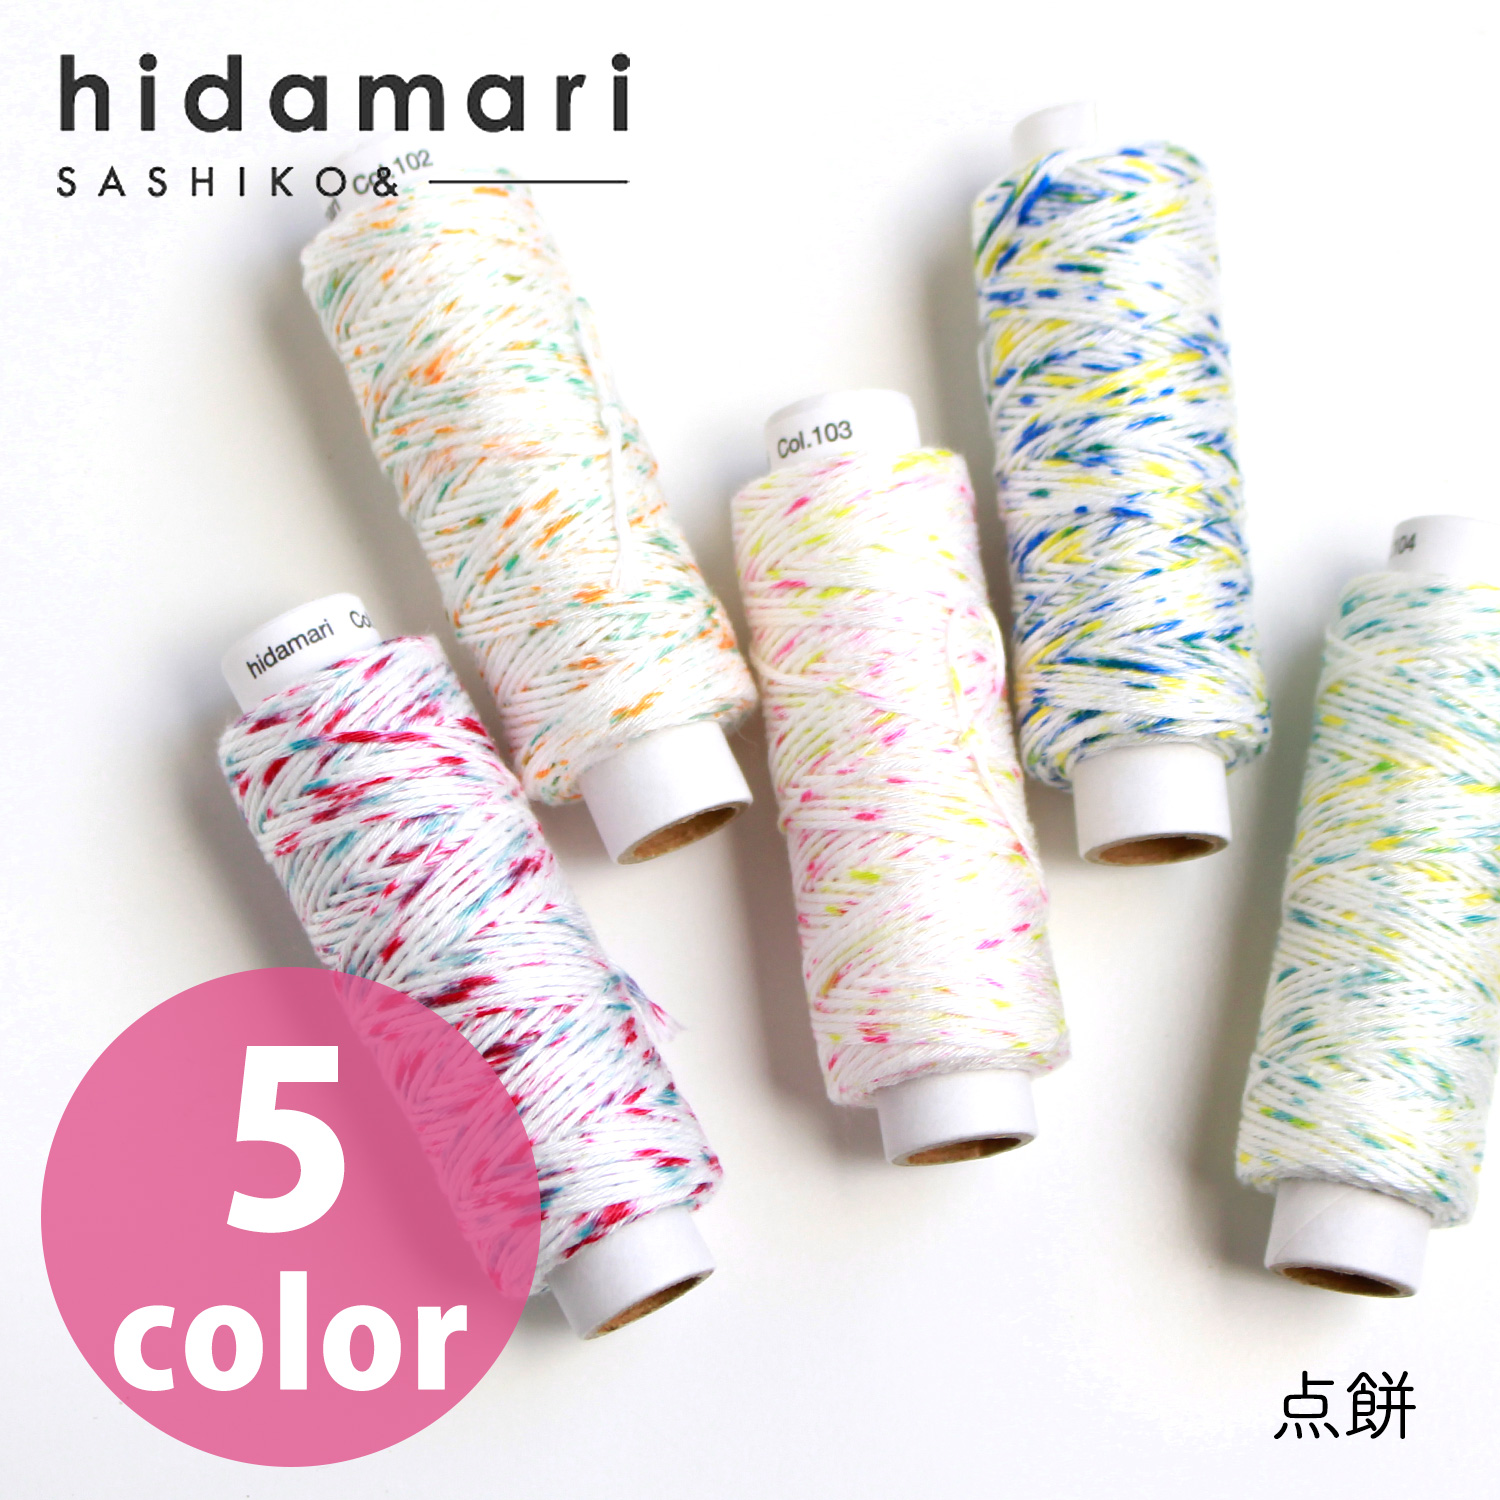 【renewal】CS122302-101~105 Cosmo Sashiko Thread (Speckled) - hidamari - (pcs)